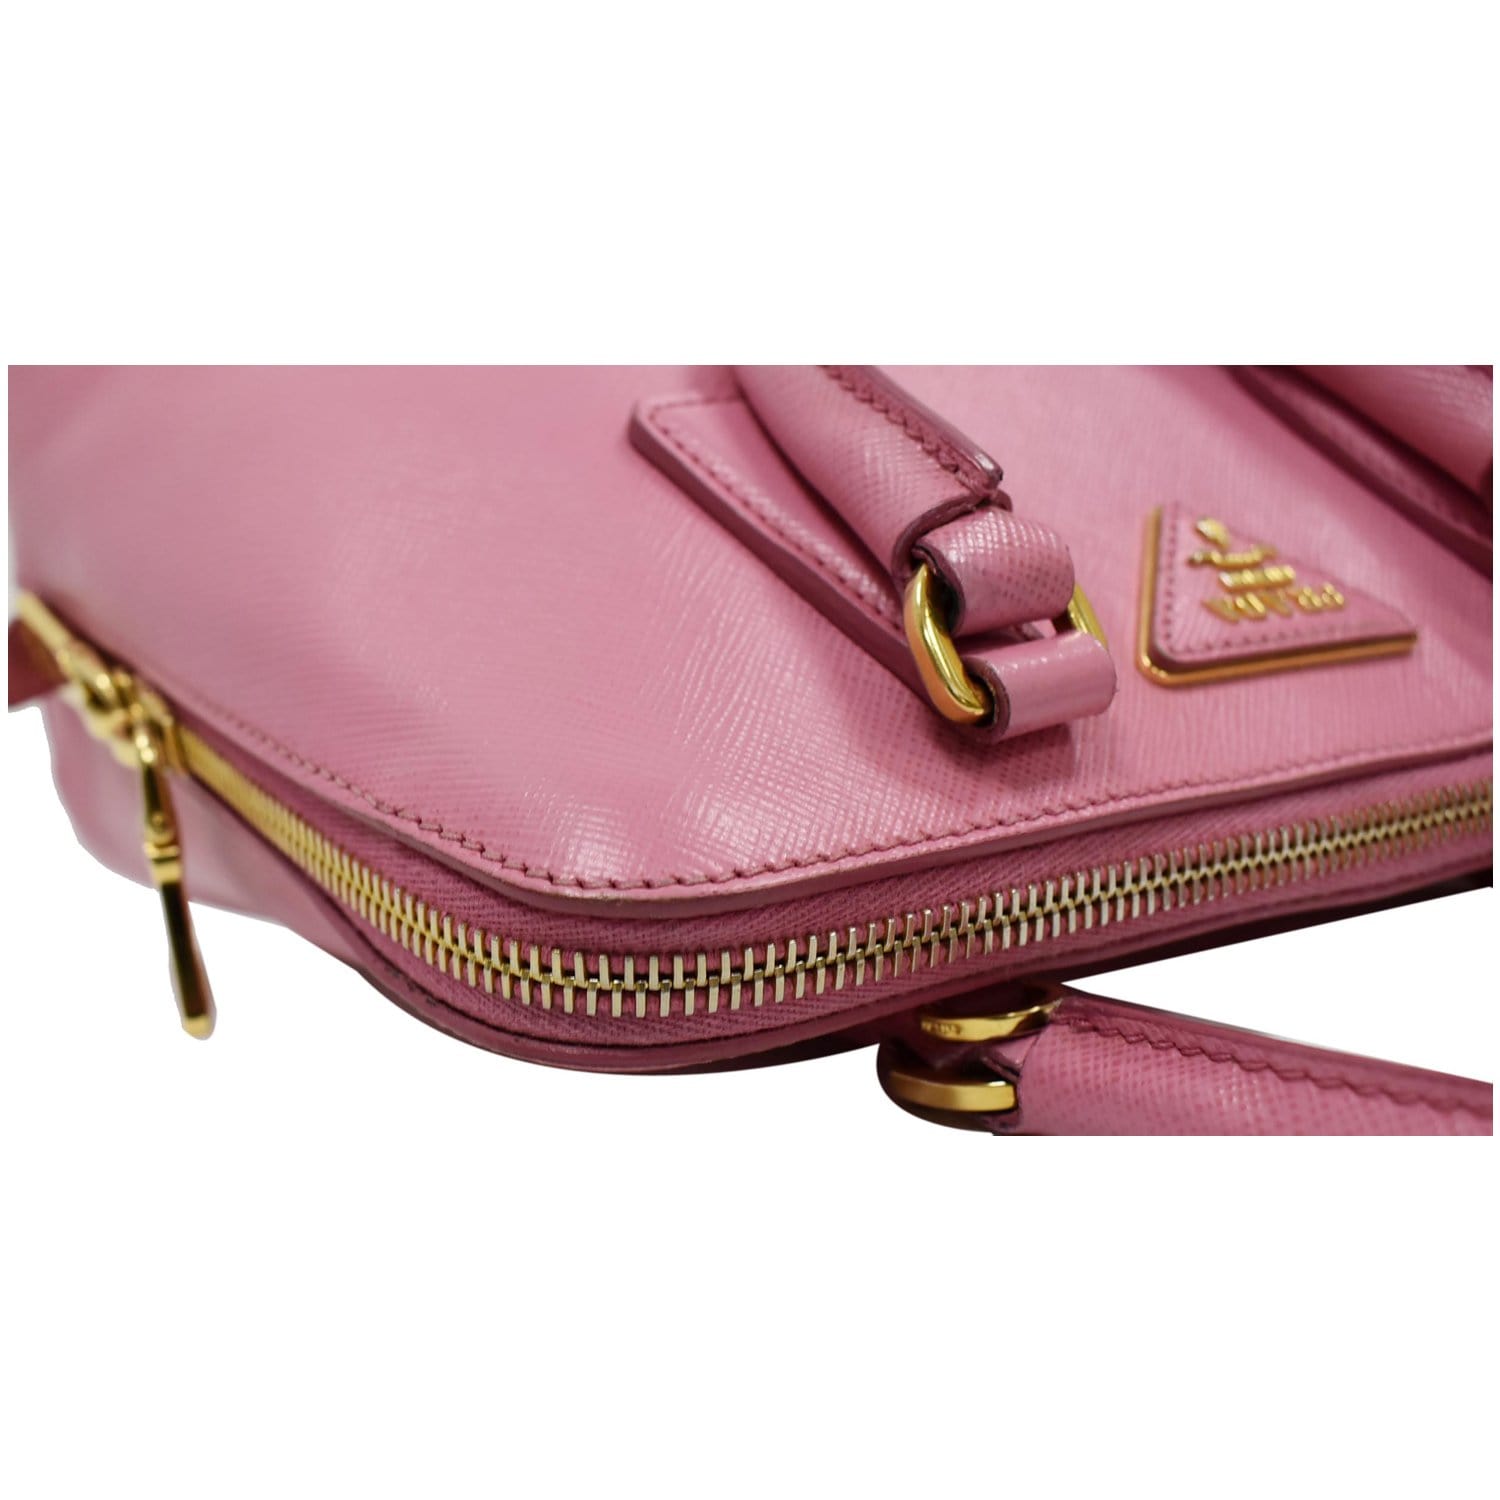 Saffiano leather handbag Prada Multicolour in Leather - 31021357